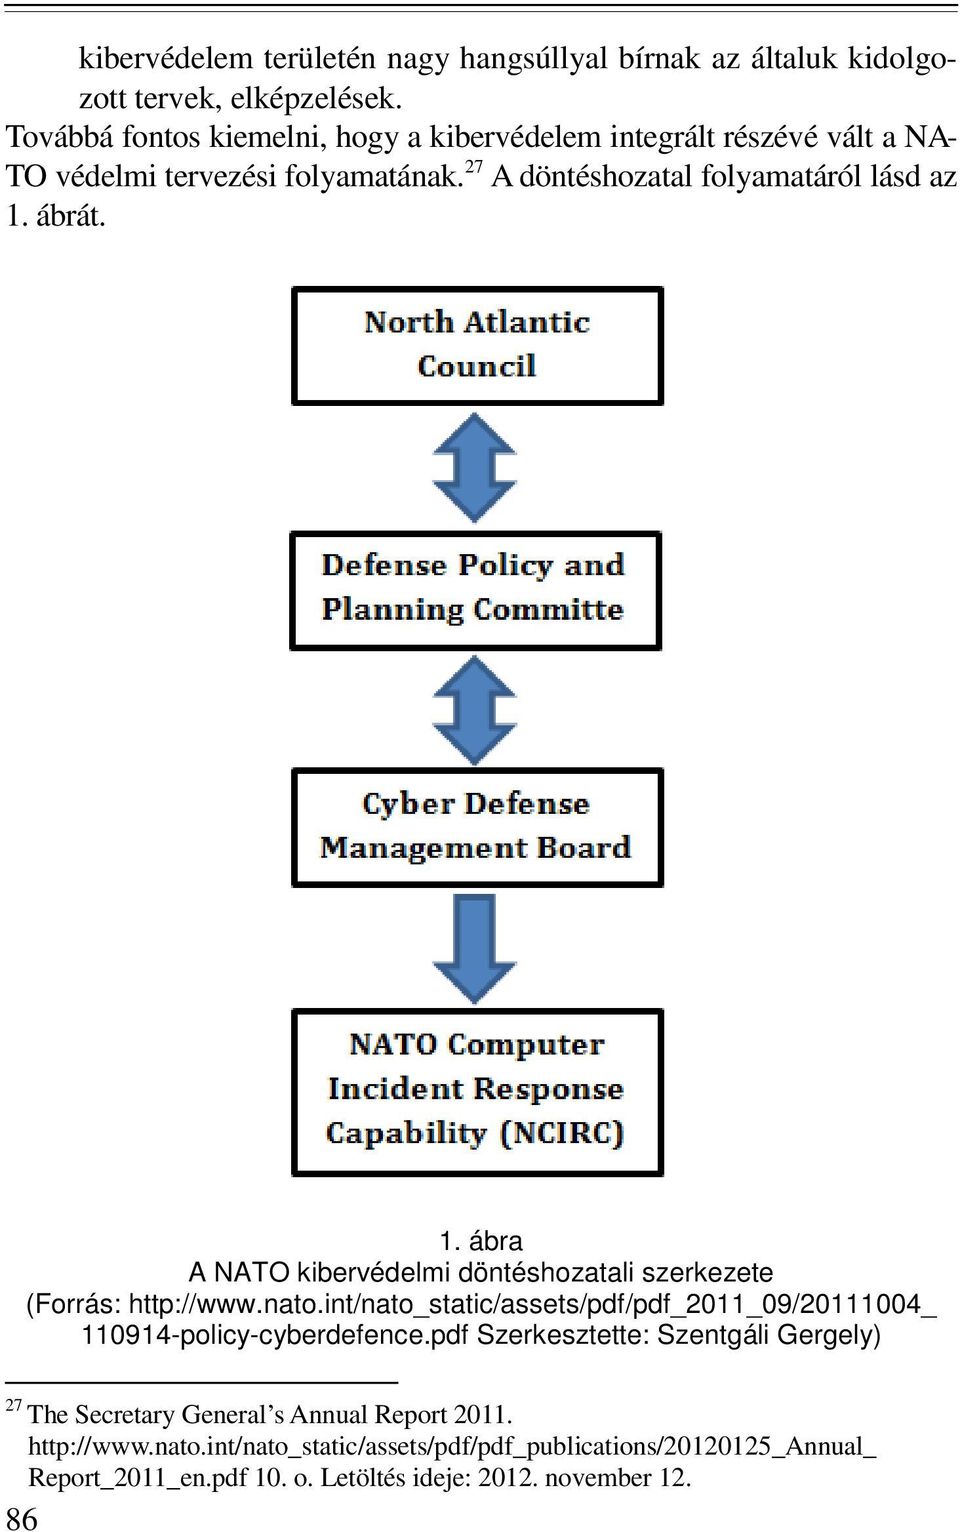 1. ábra A NATO kibervédelmi döntéshozatali szerkezete (Forrás: http://www.nato.int/nato_static/assets/pdf/pdf_2011_09/20111004_ 110914-policy-cyberdefence.